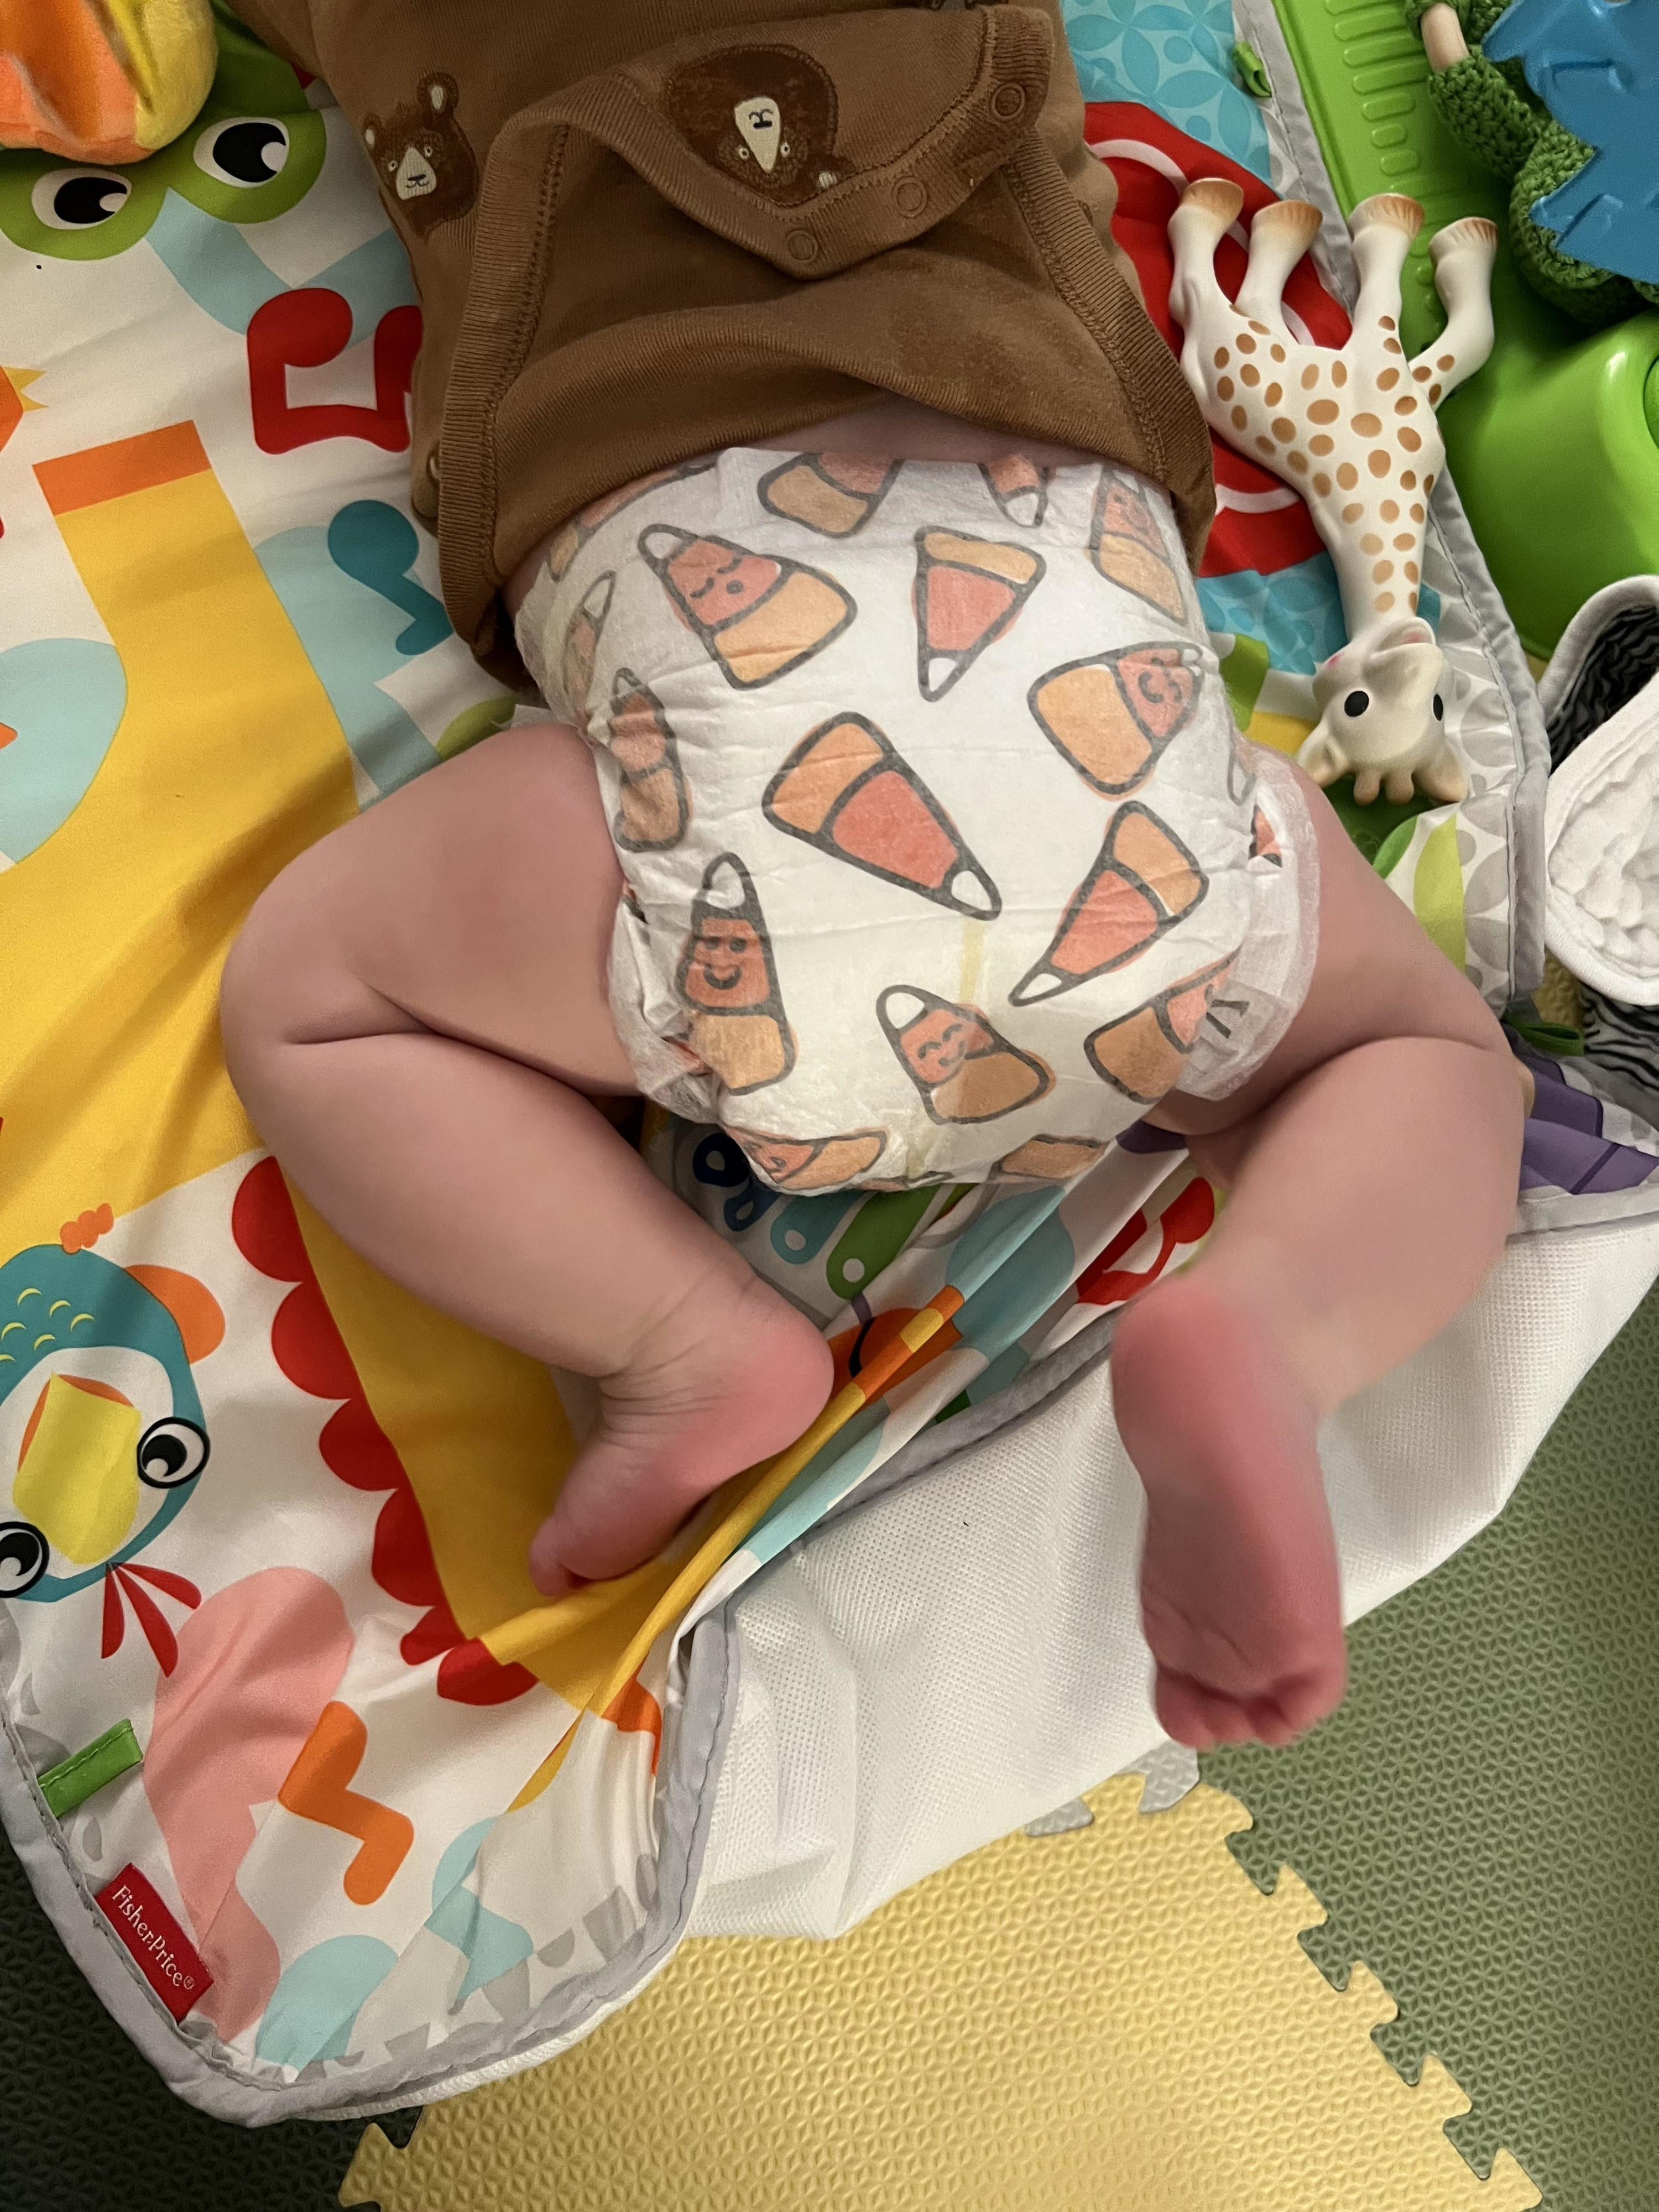 buzzfeed editor&#x27;s baby wearing a candy corn print diaper